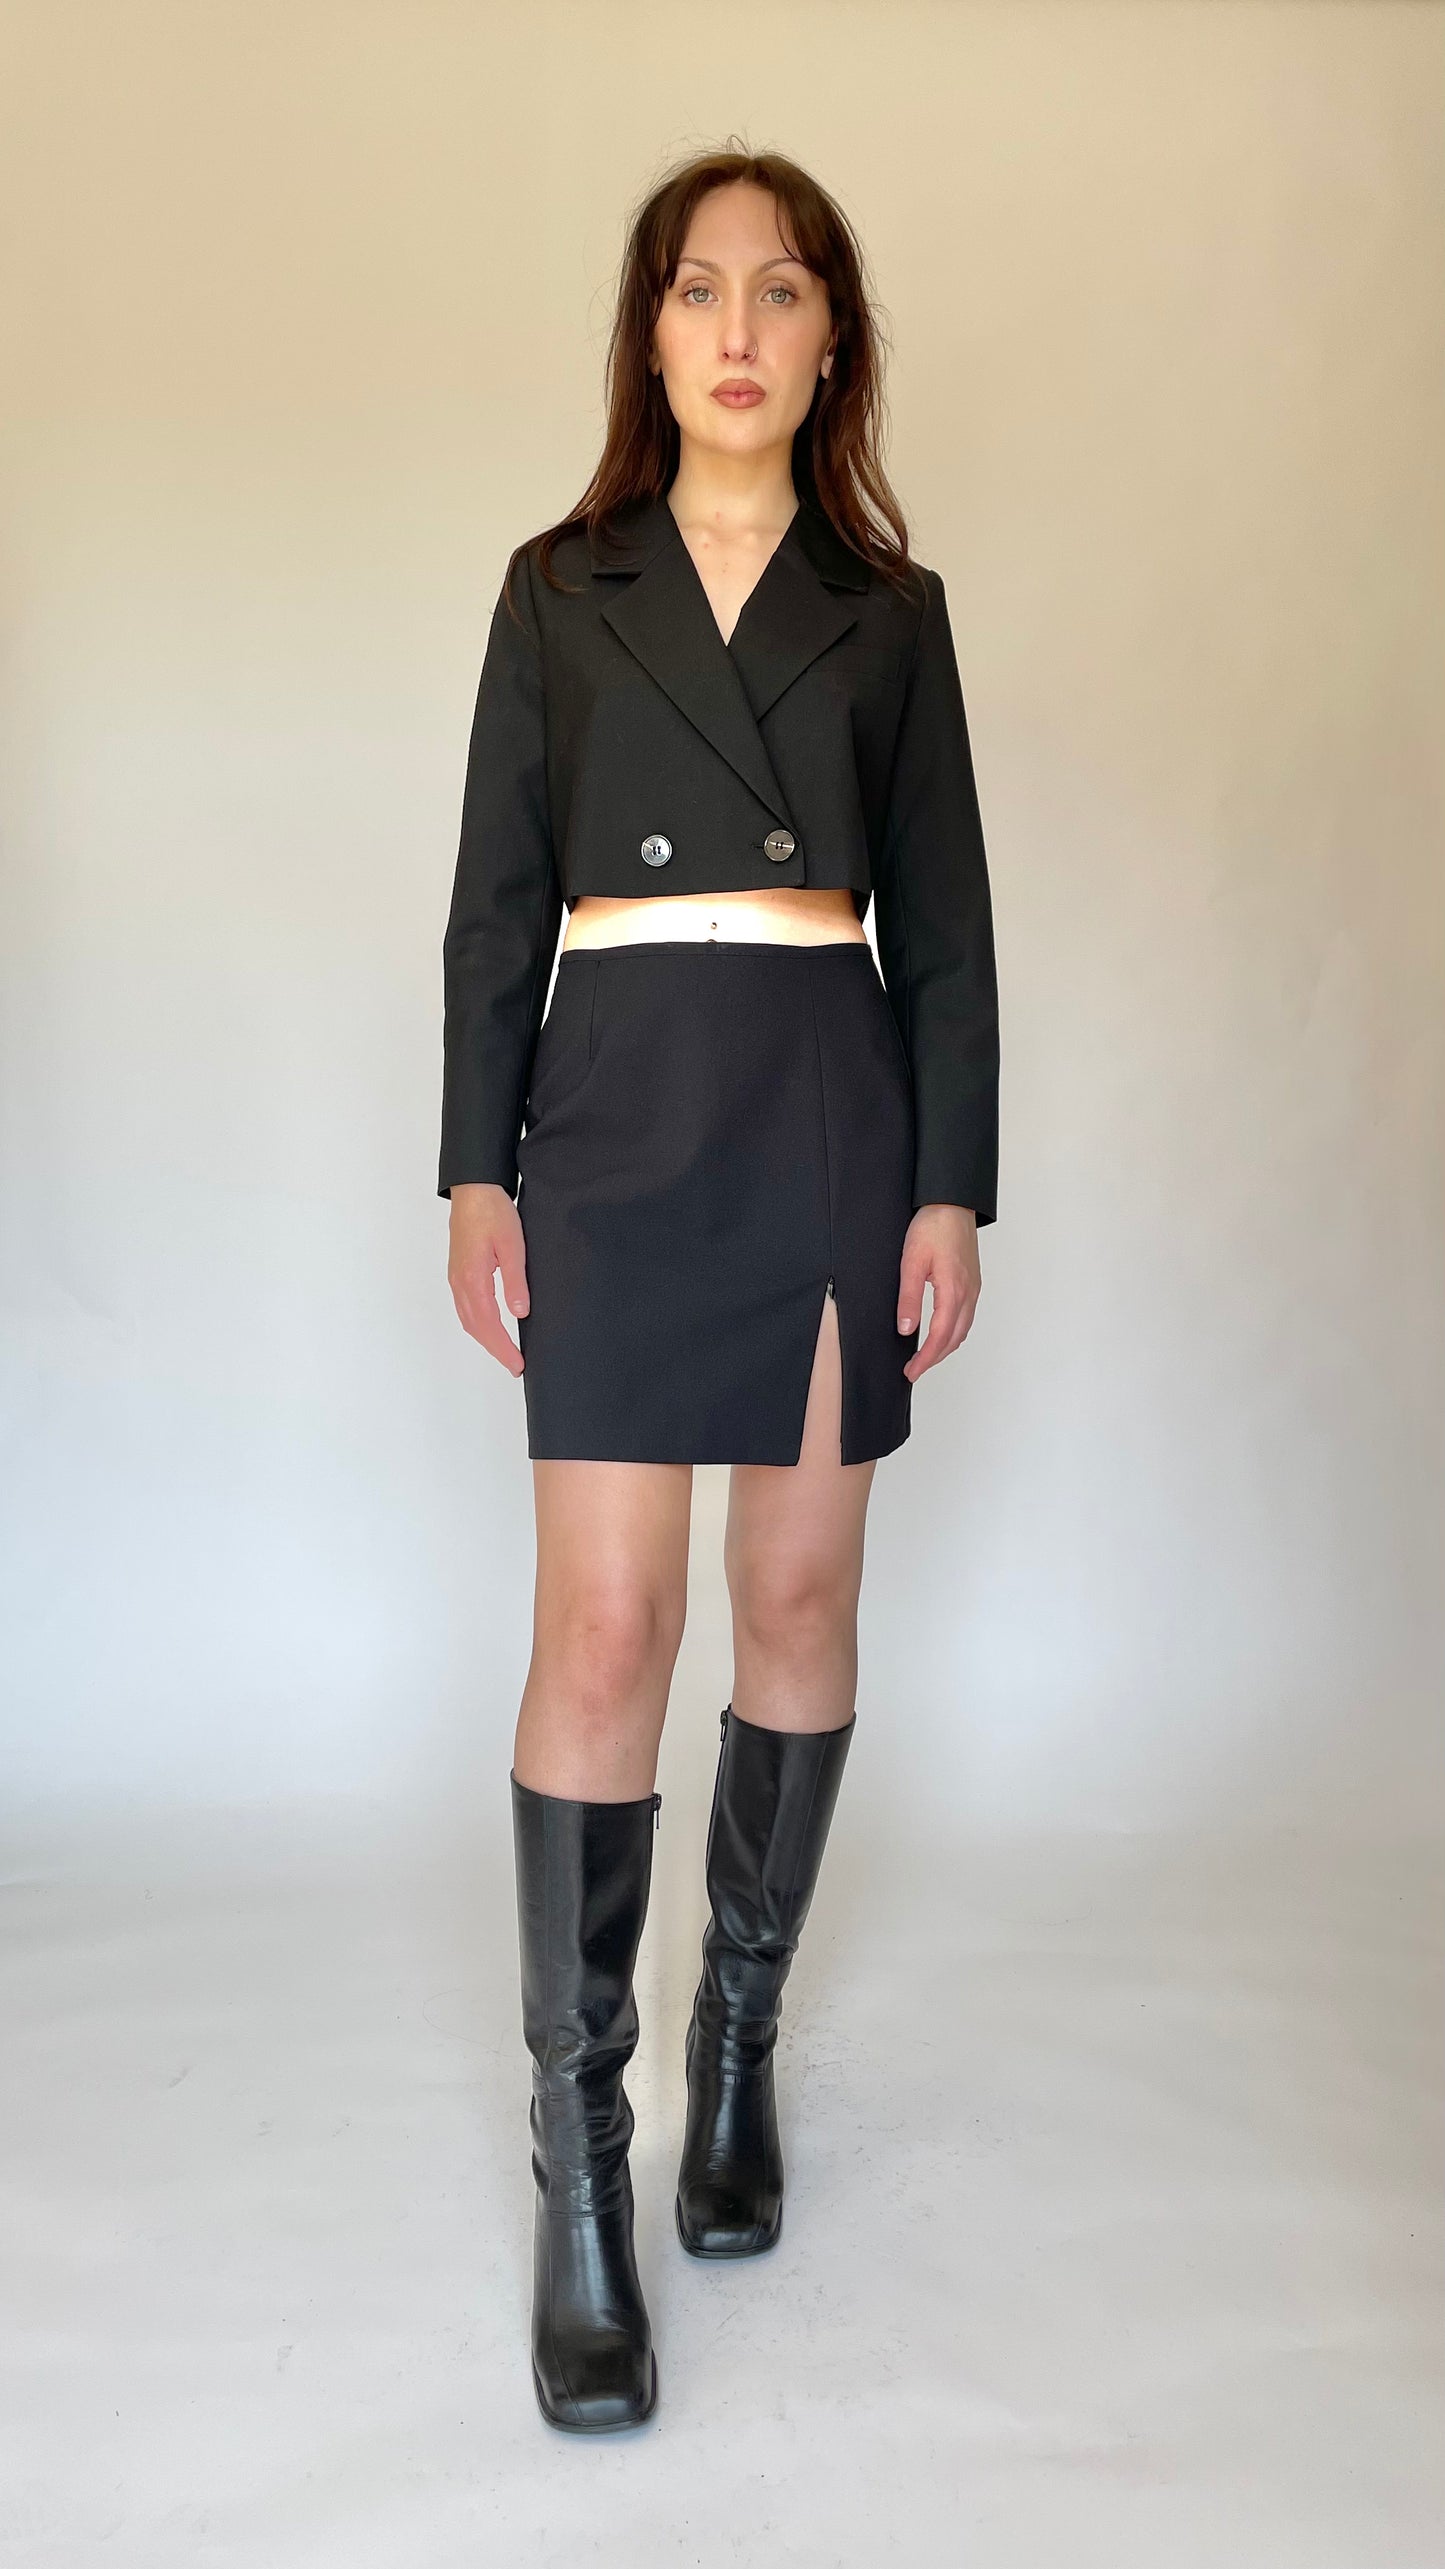 Test skirt (size 26)